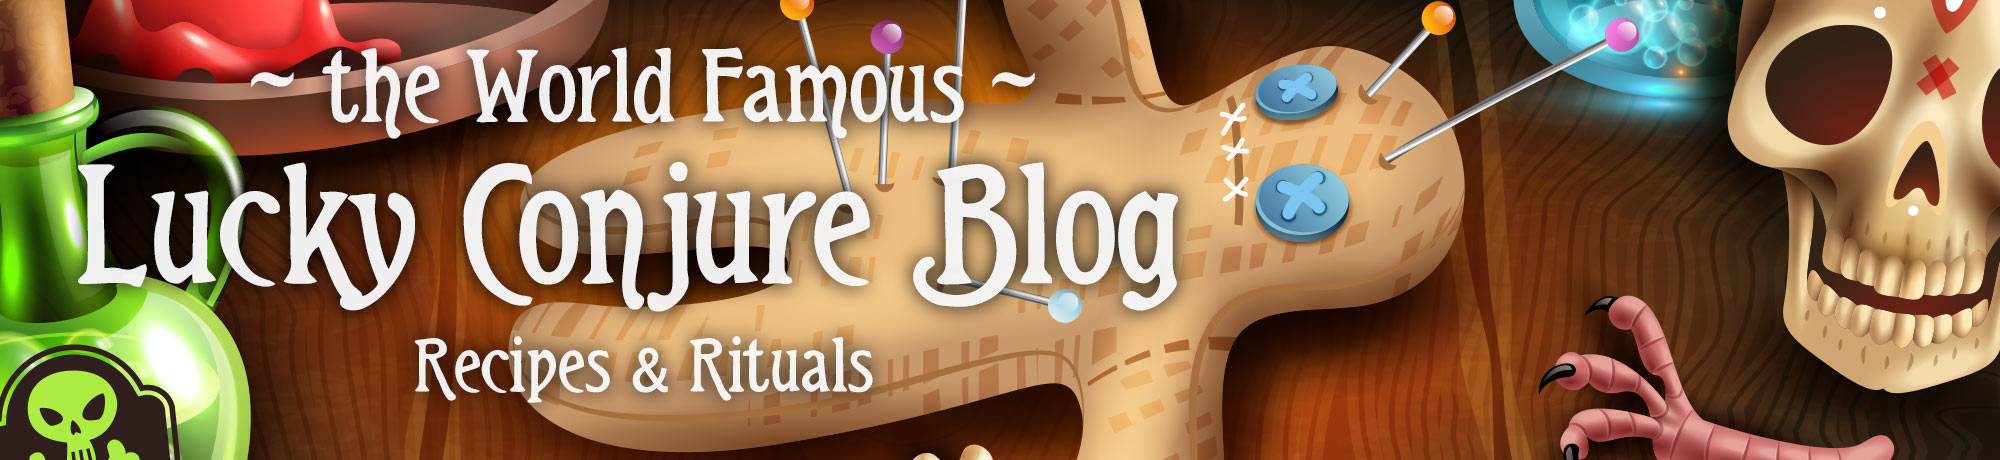 The Lucky Conjure Blog: Recipes & Rituals